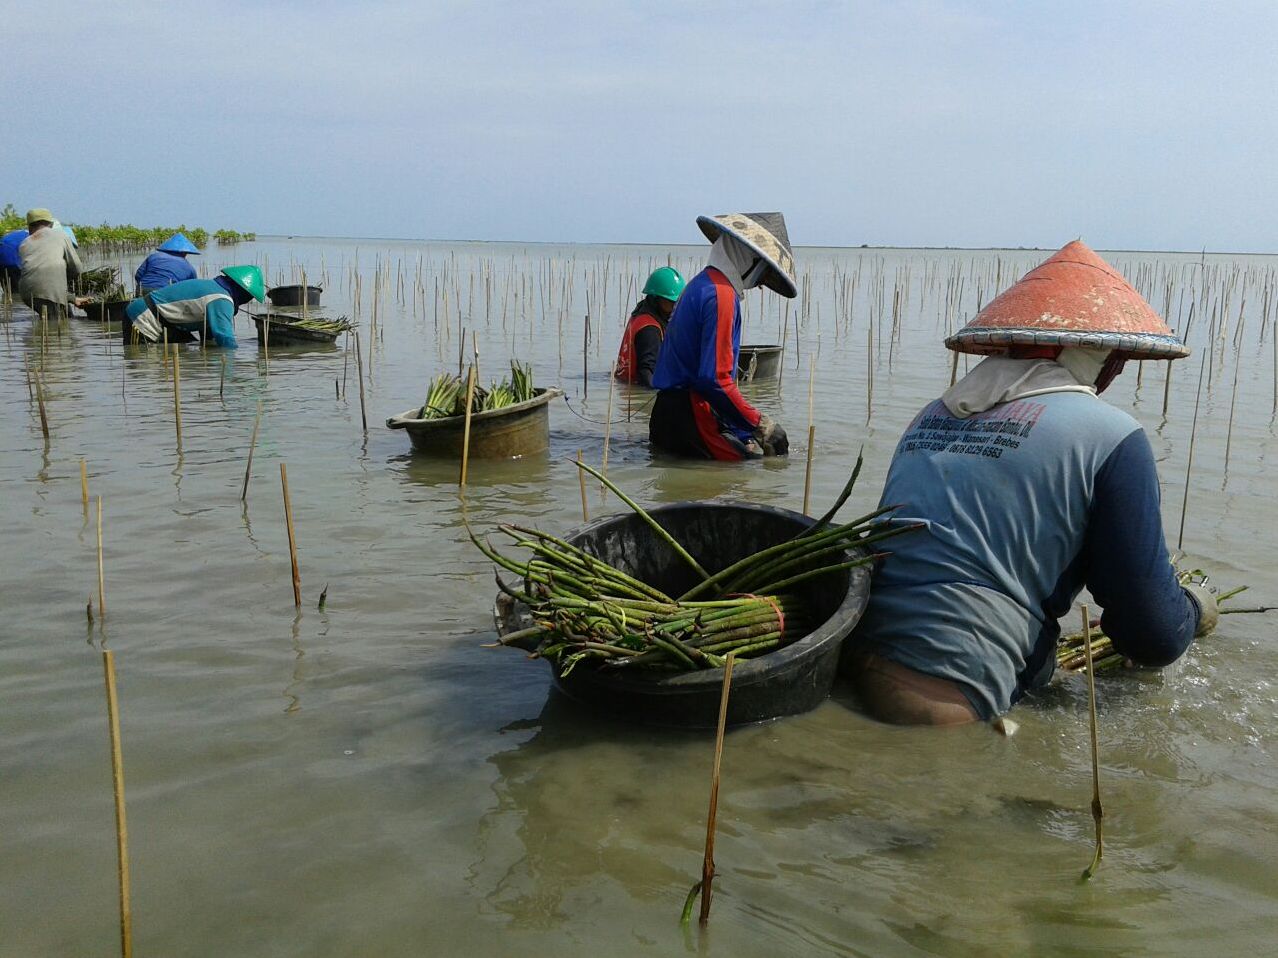 Penanaman mangrove sistem propagul oleh KPSA Wana Lestari di pesisir Desa Sawojajar, Brebes. (Foto: Dokumentasi pribadi).